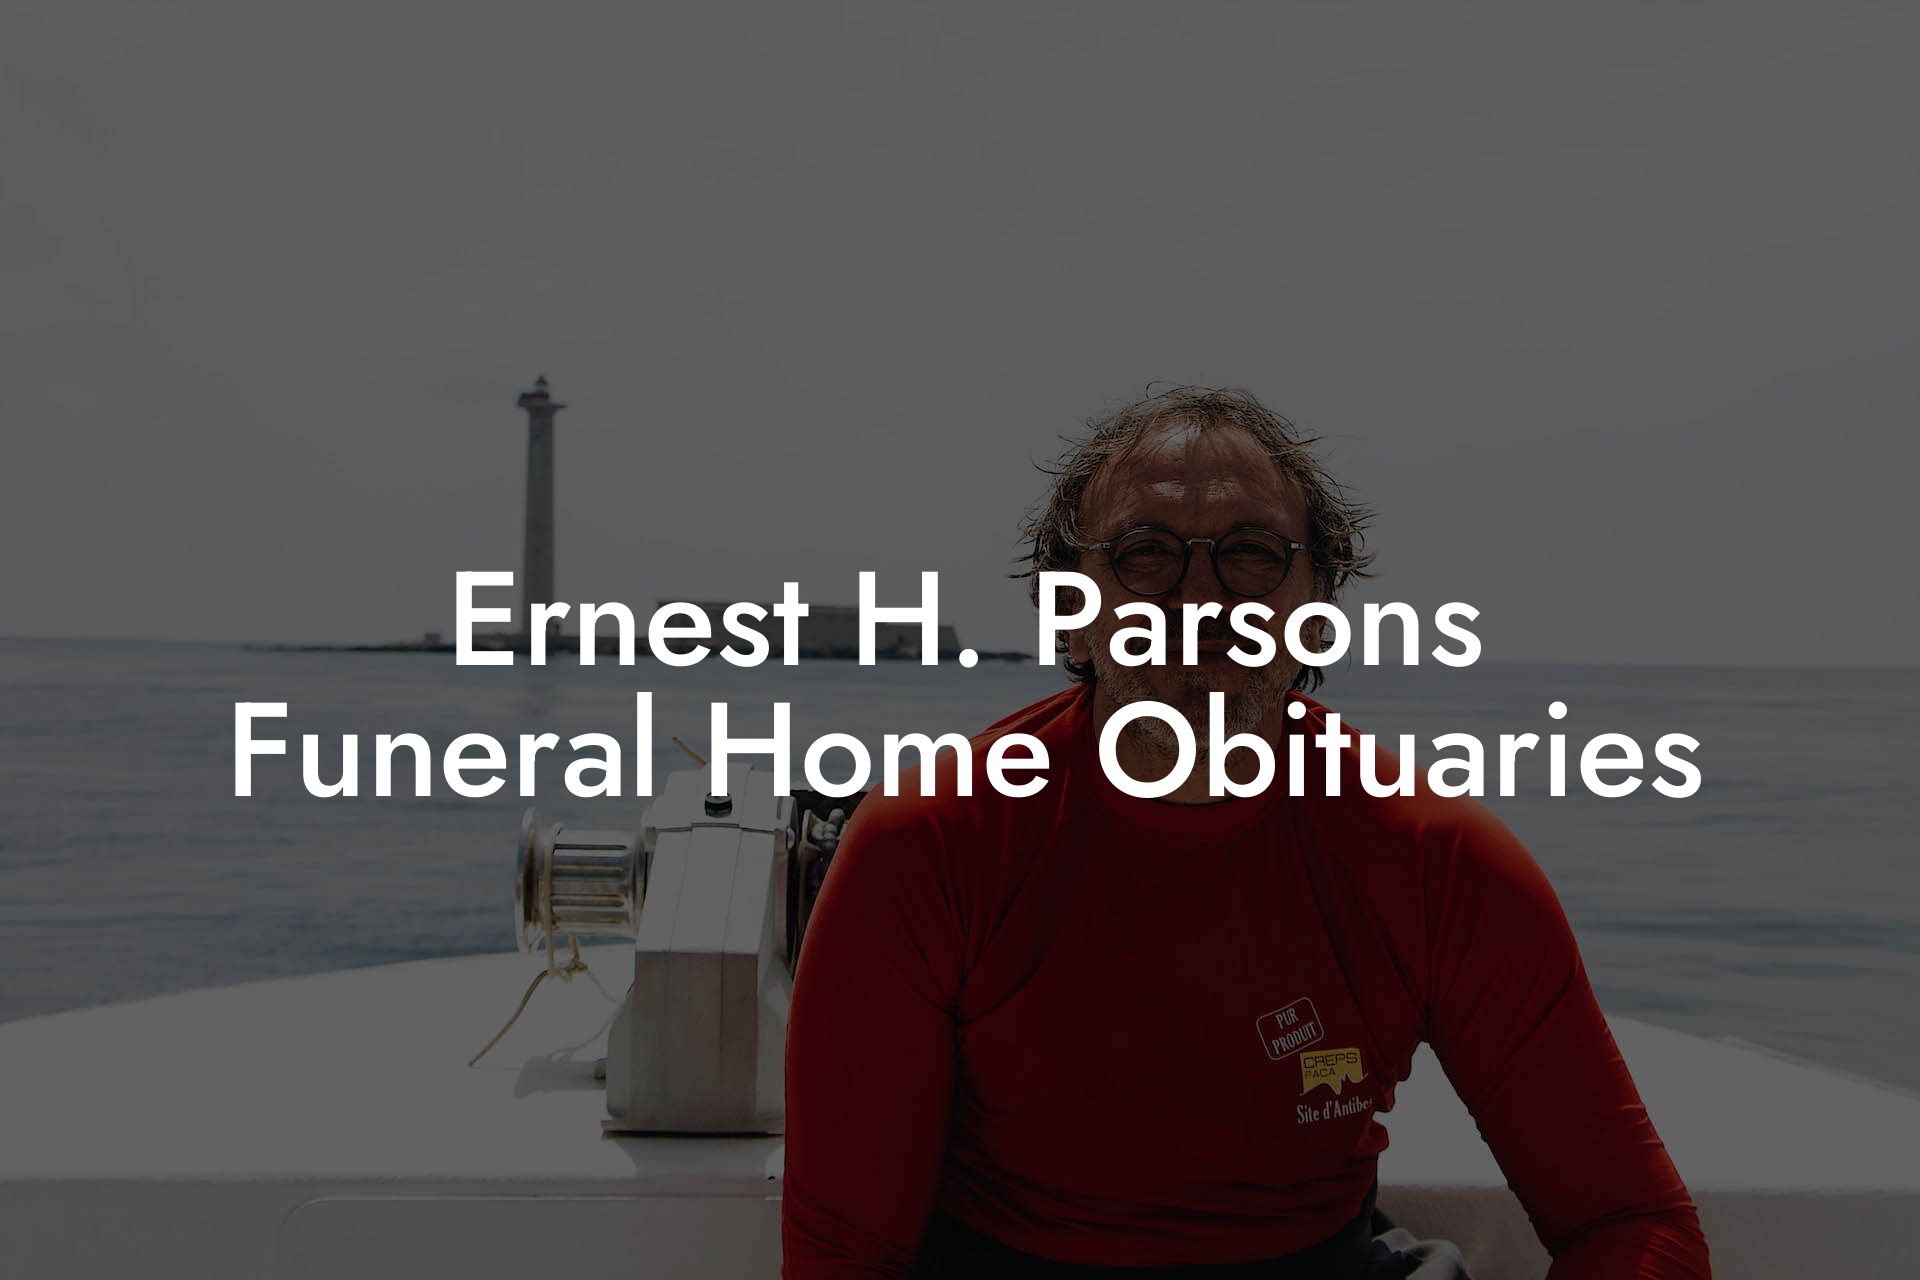 Ernest H. Parsons Funeral Home Obituaries